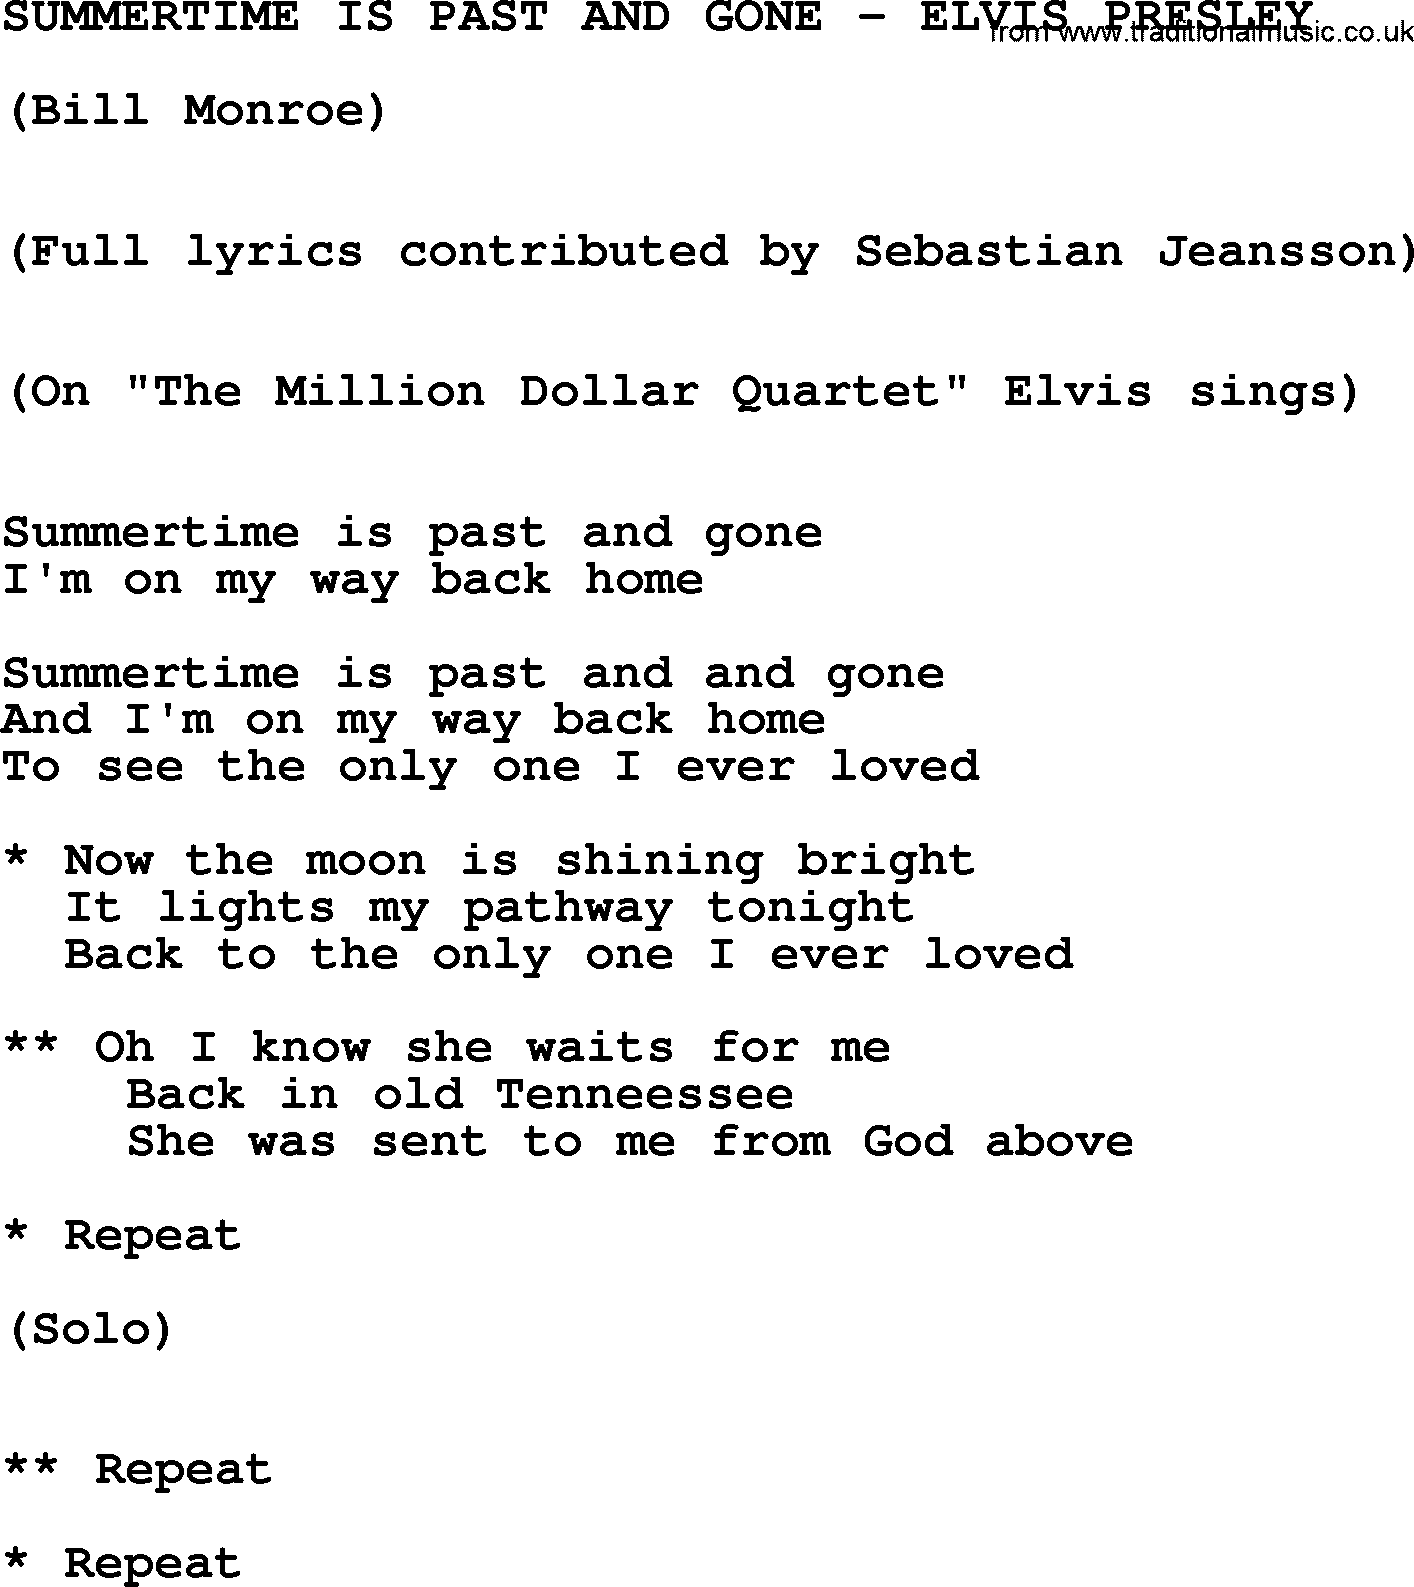 Elvis Presley song: Summertime Is Past And Gone-Elvis Presley-.txt lyrics and chords